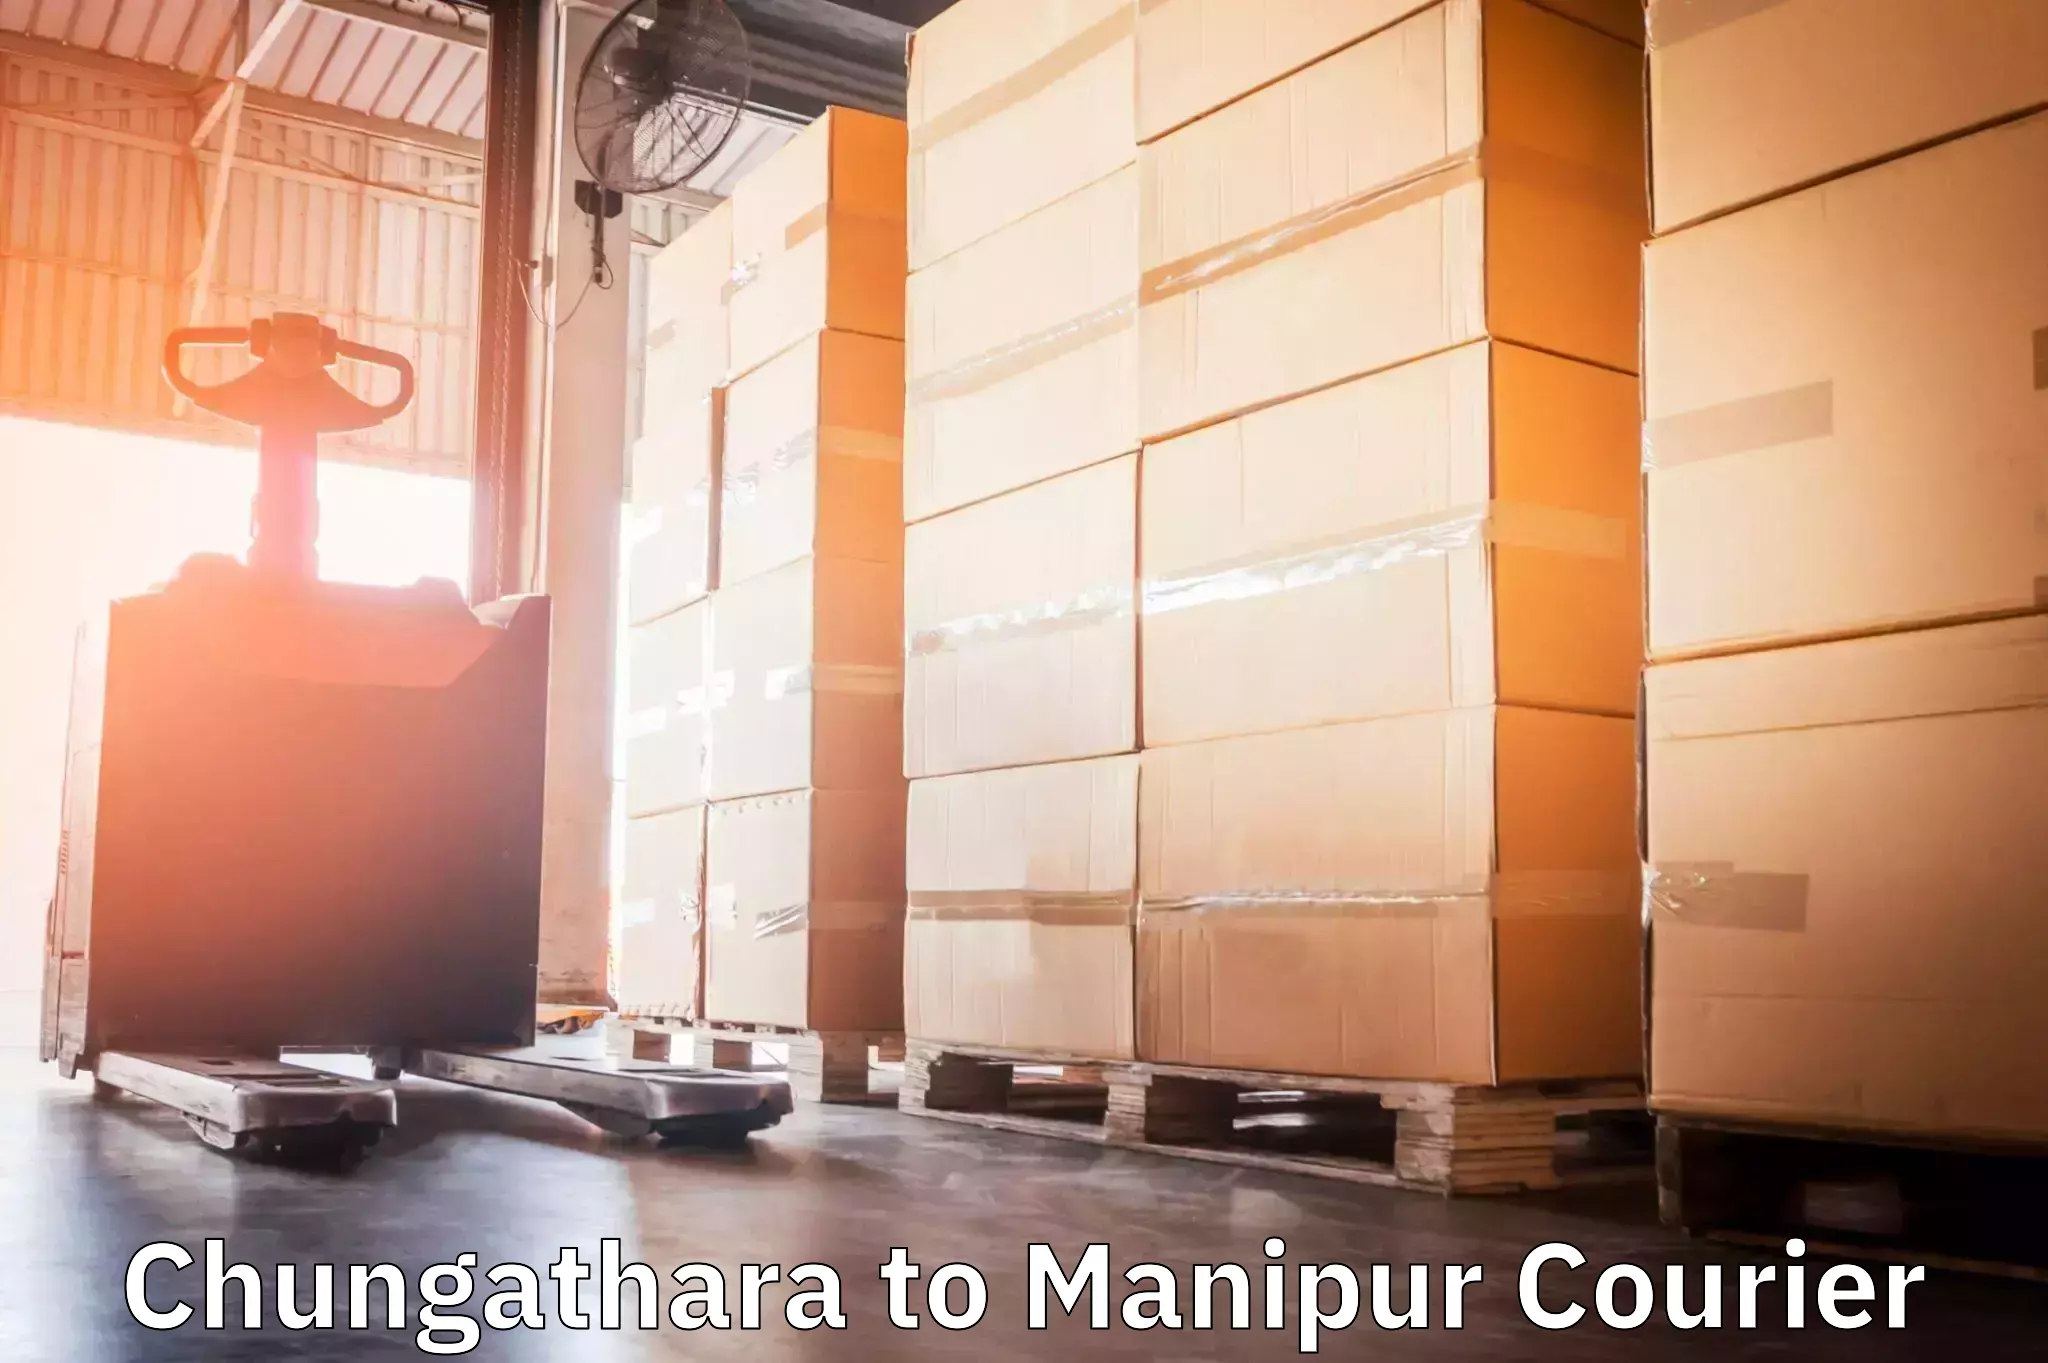 On-demand shipping options Chungathara to Churachandpur